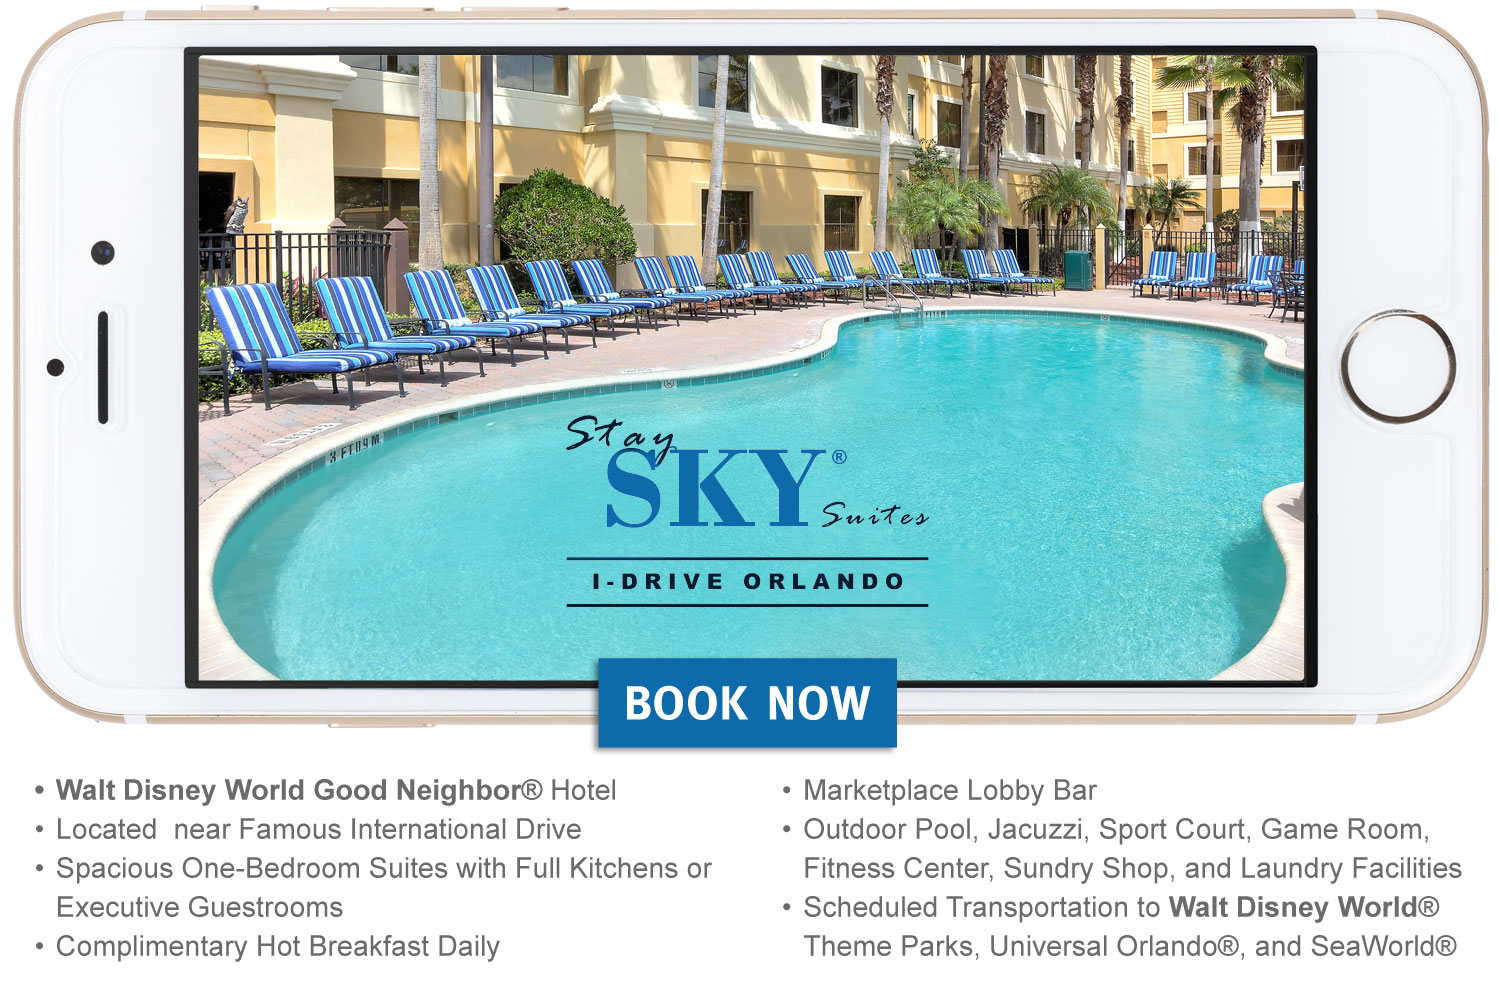 staySky Suites I - Drive - Orlando Resorts - Book Now